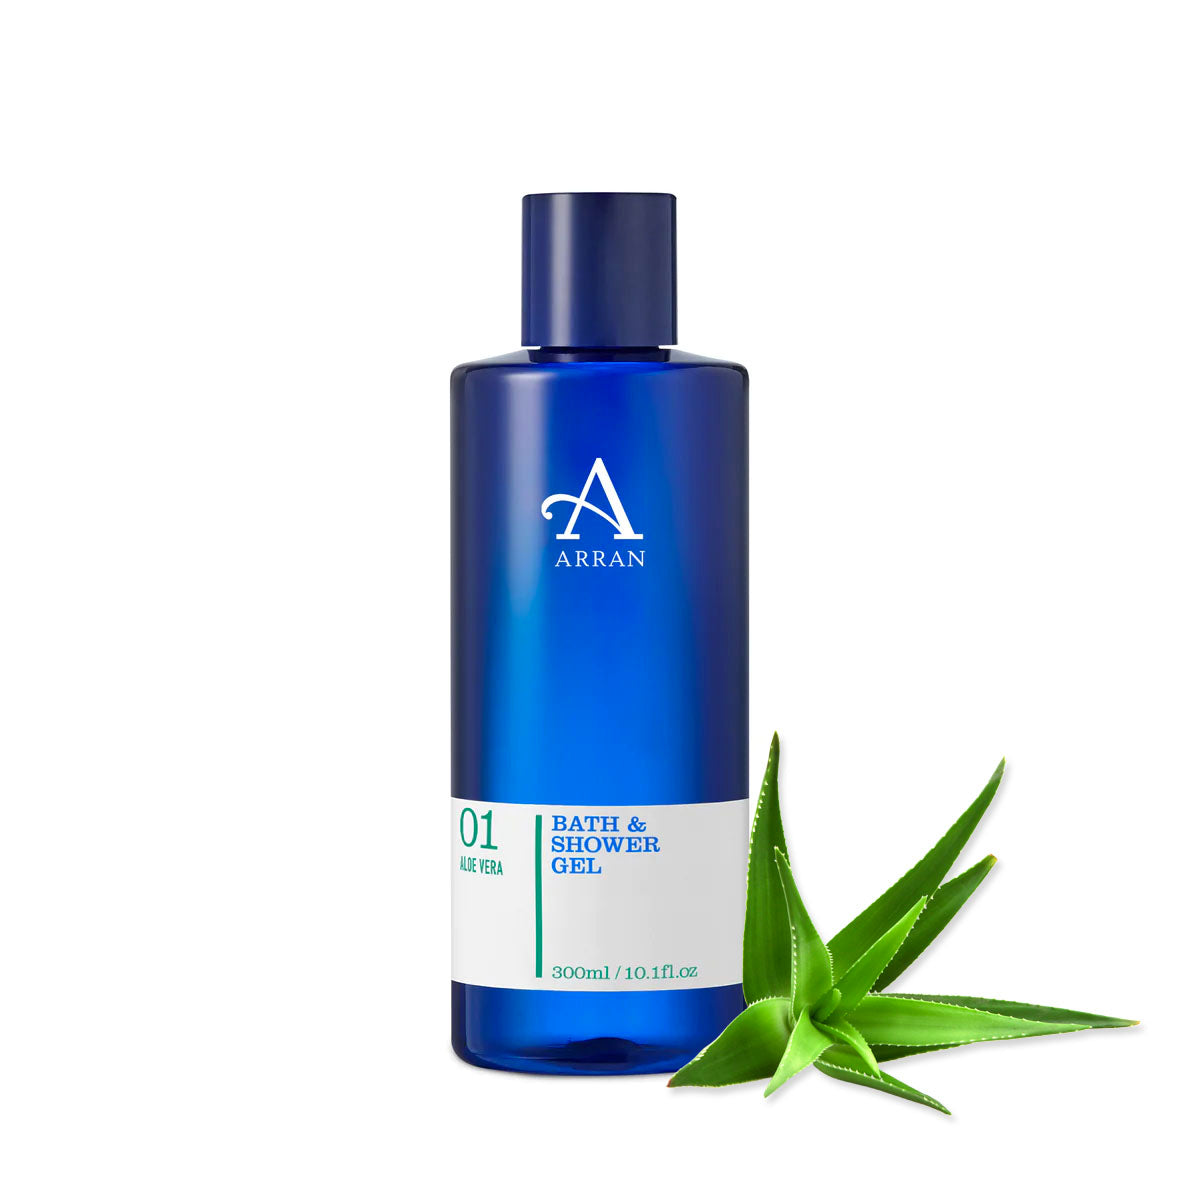 An image of ARRAN Apothecary Aloe Vera Bath & Shower Gel | Made in Scotland | Aloe Vera Scen...